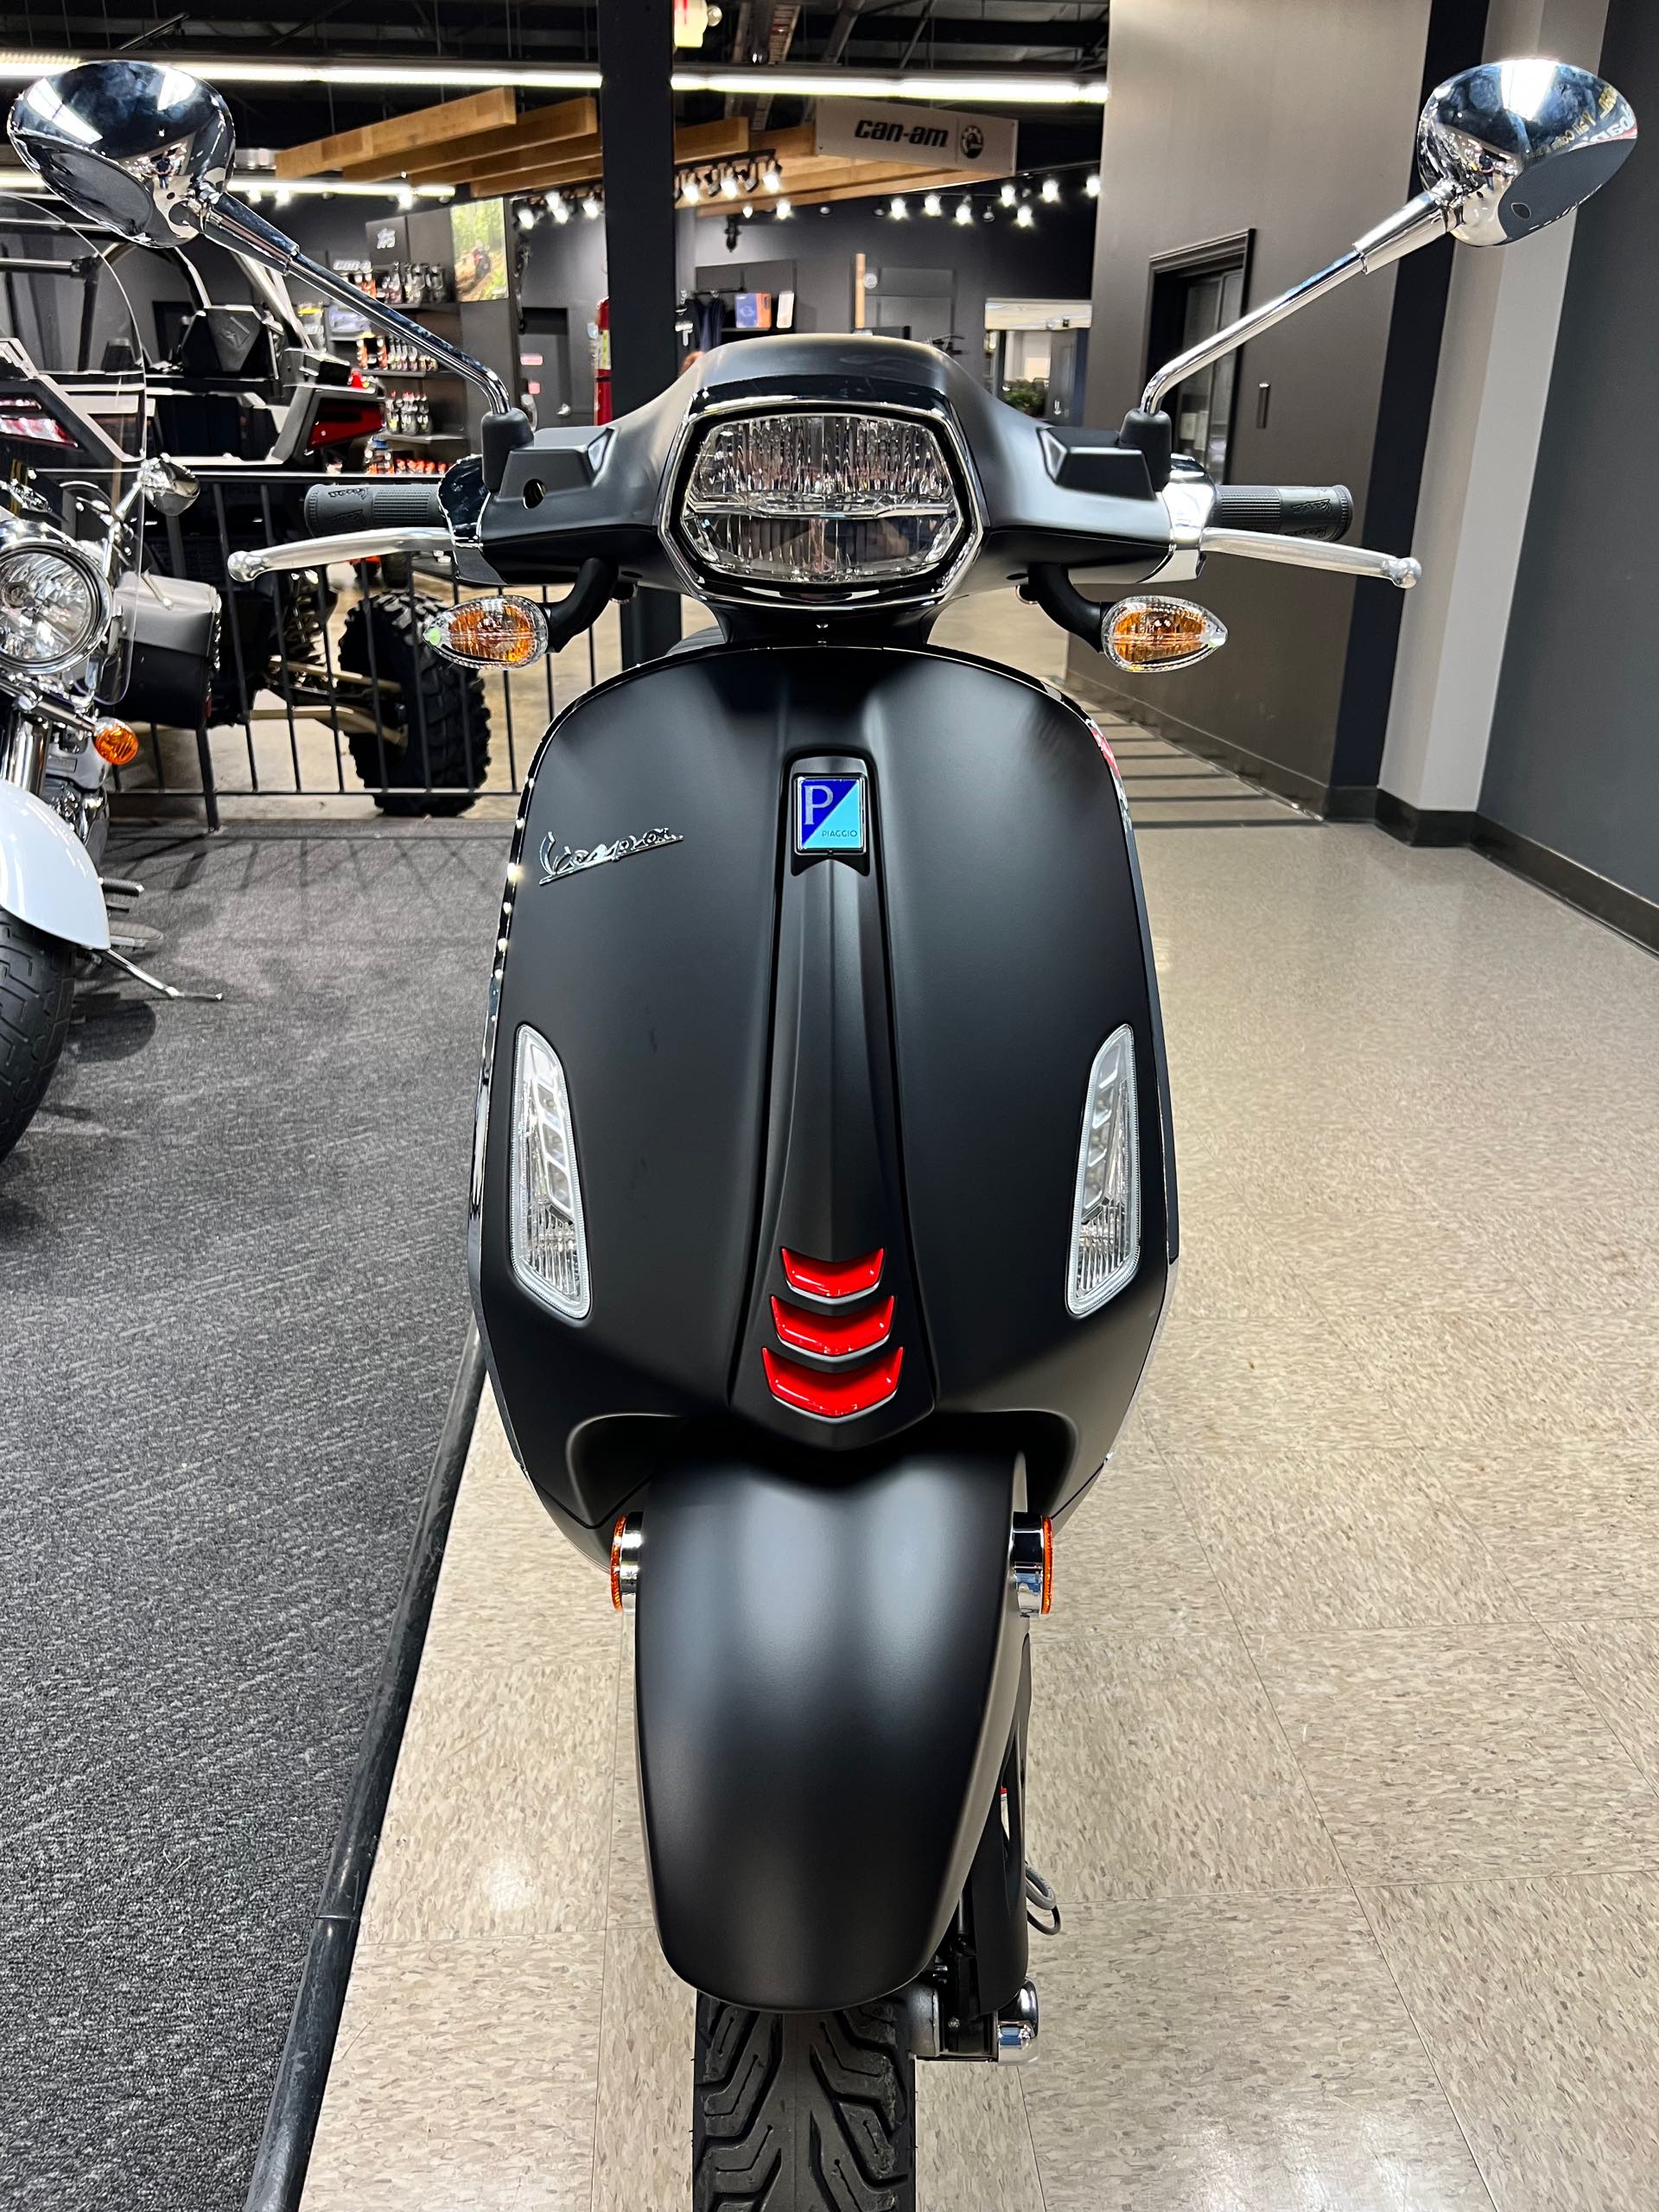 2022 Vespa Sprint 150 S at Sloans Motorcycle ATV, Murfreesboro, TN, 37129